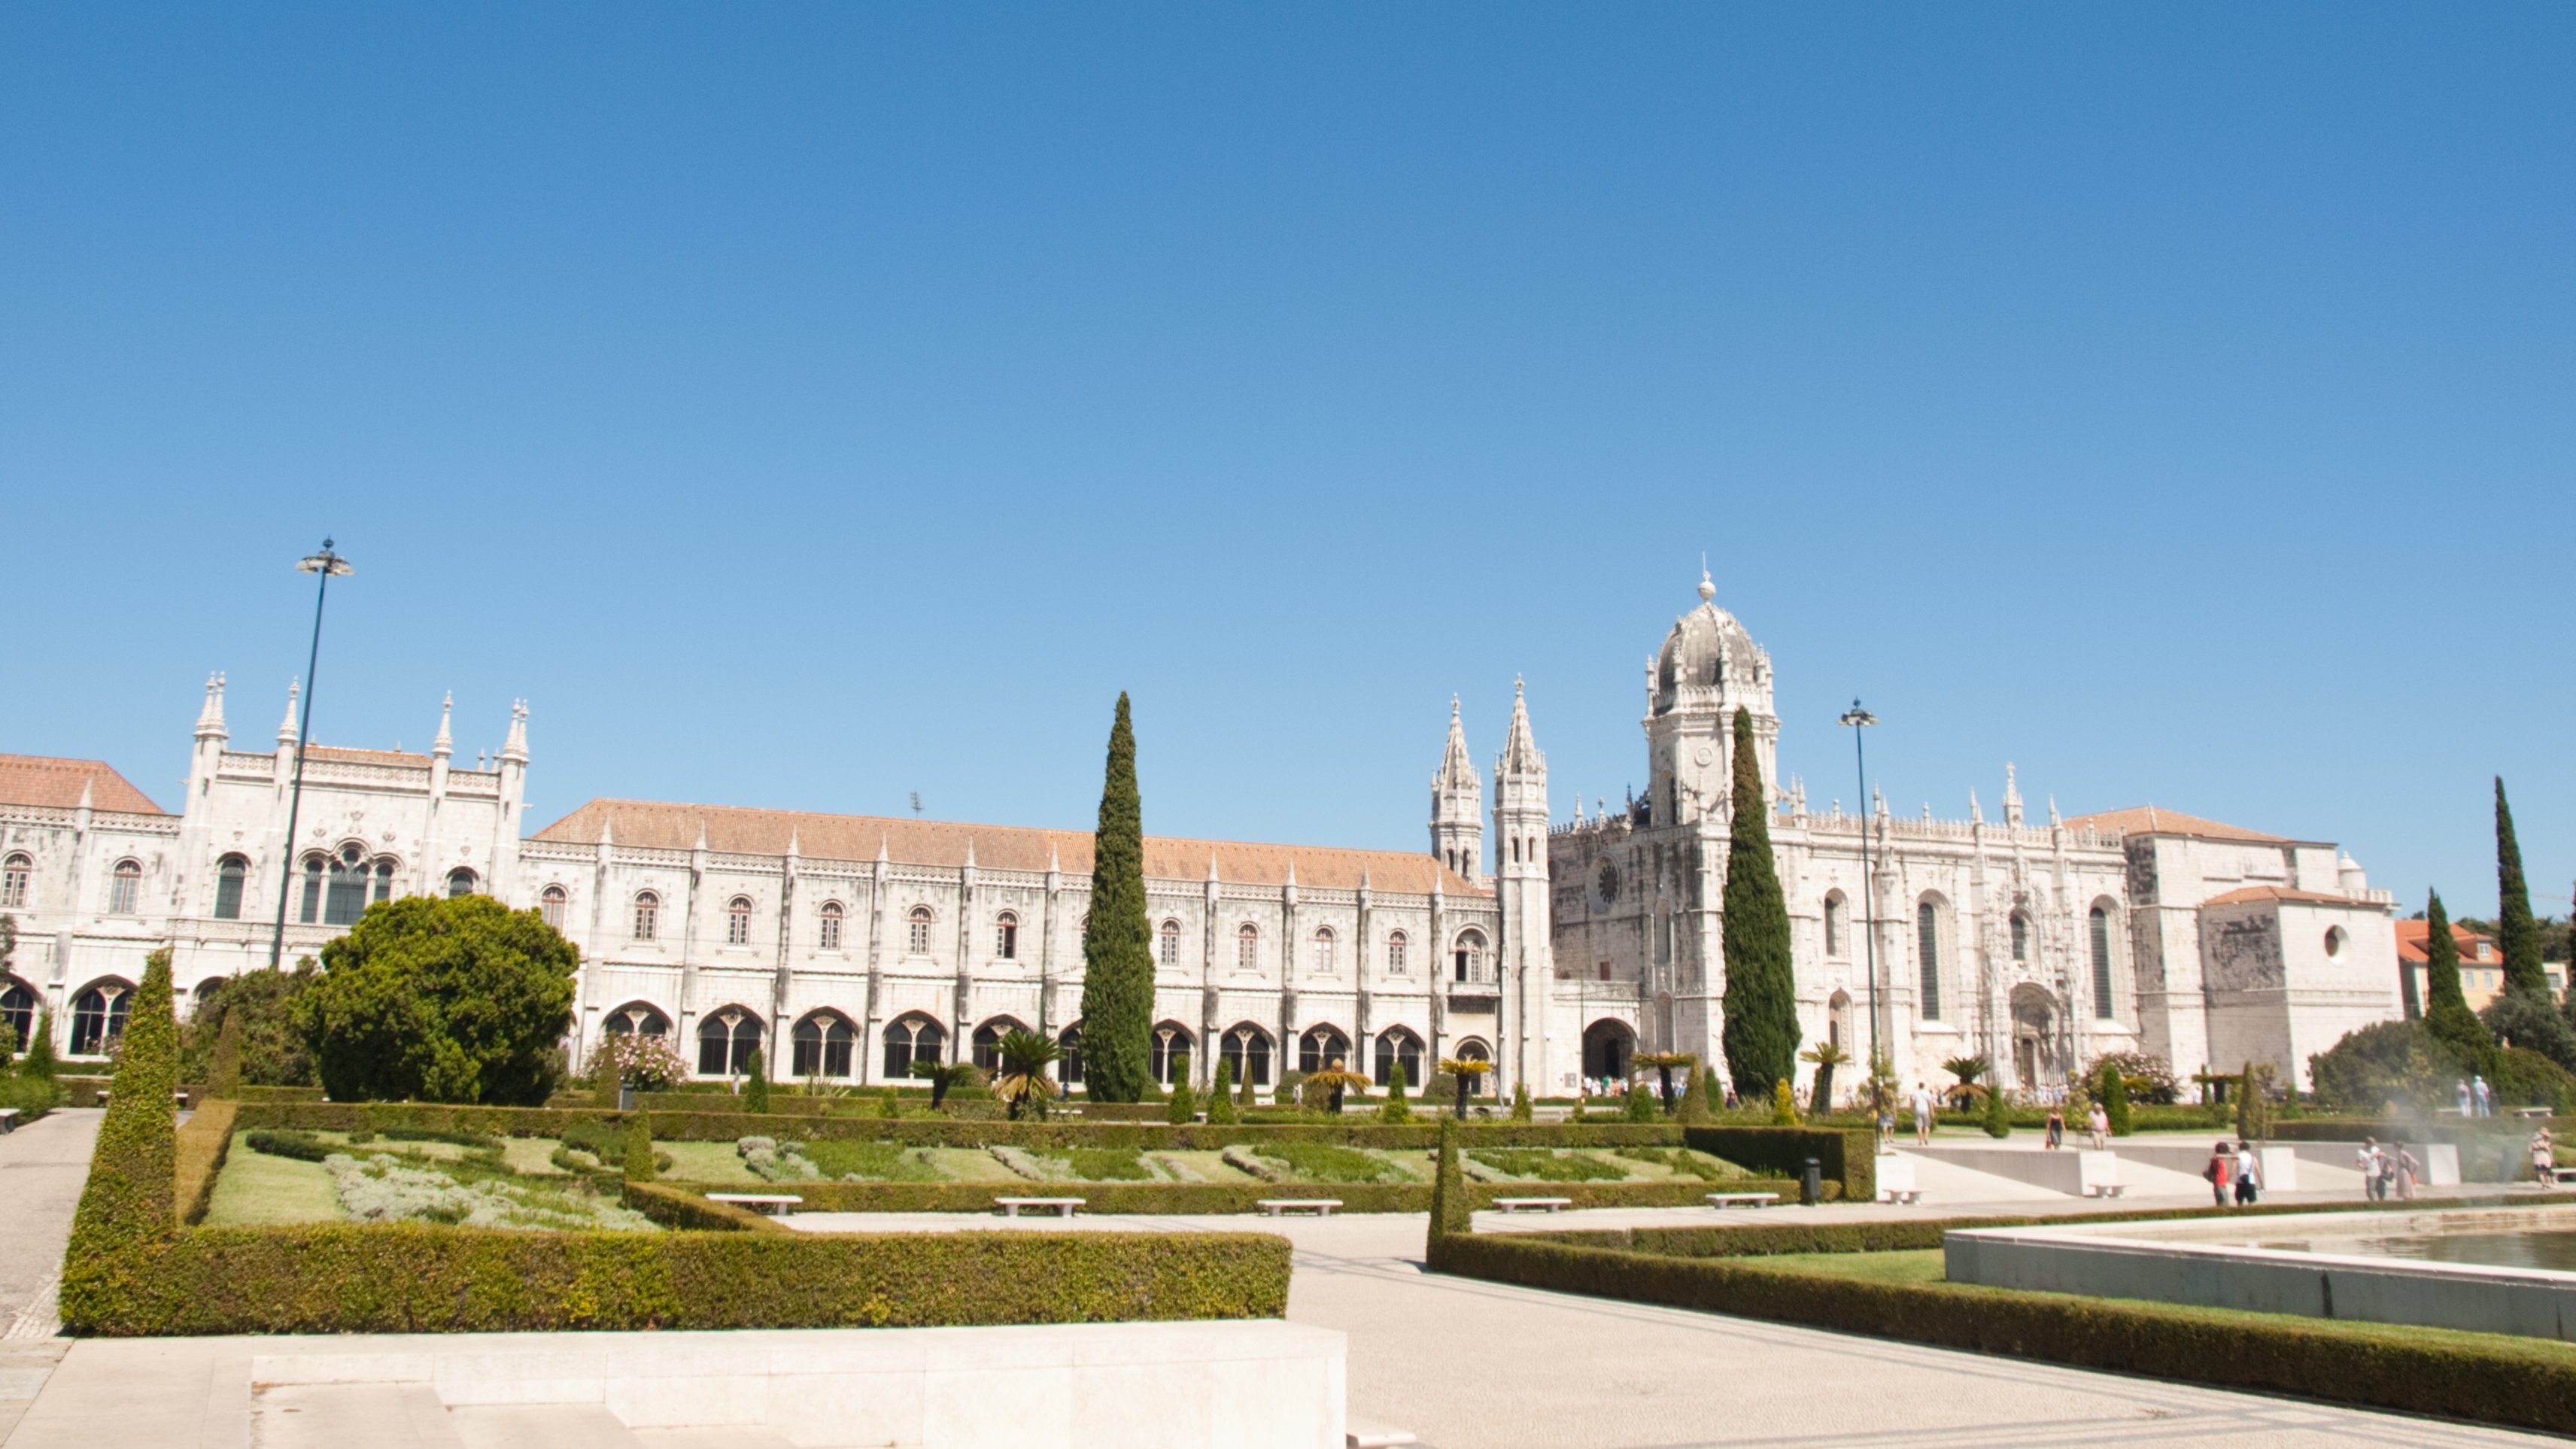 The Hieronymites Monastery of Lisbon